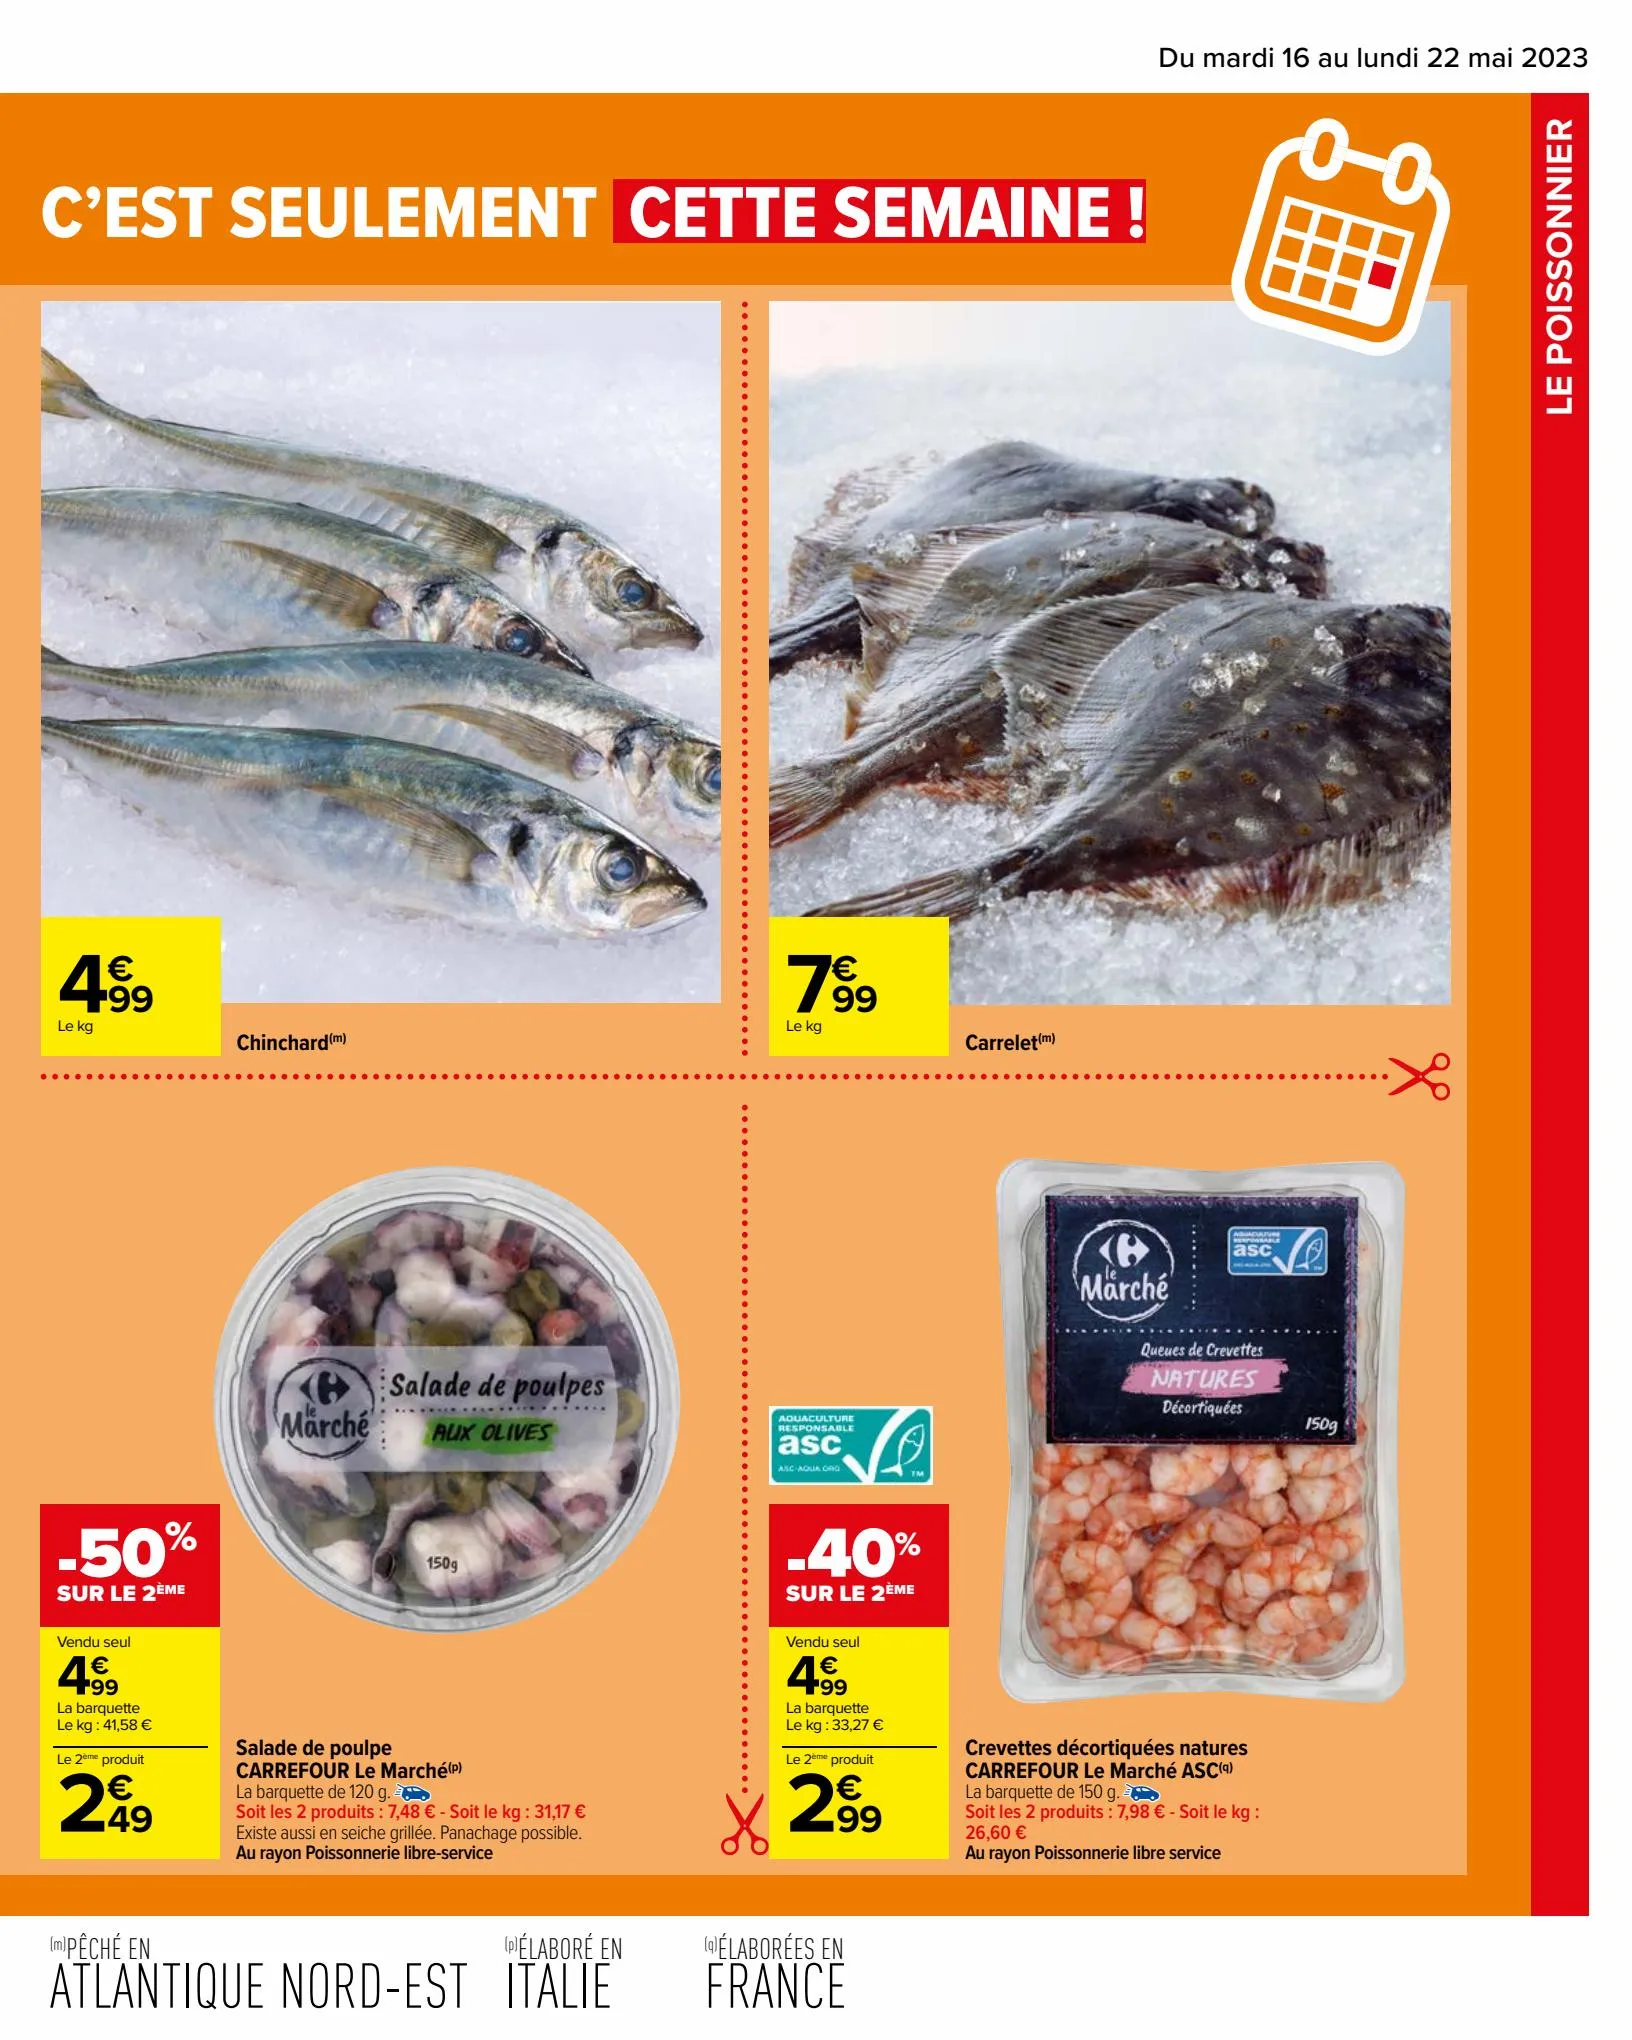 Catalogue Défi anti-inflation, page 00021